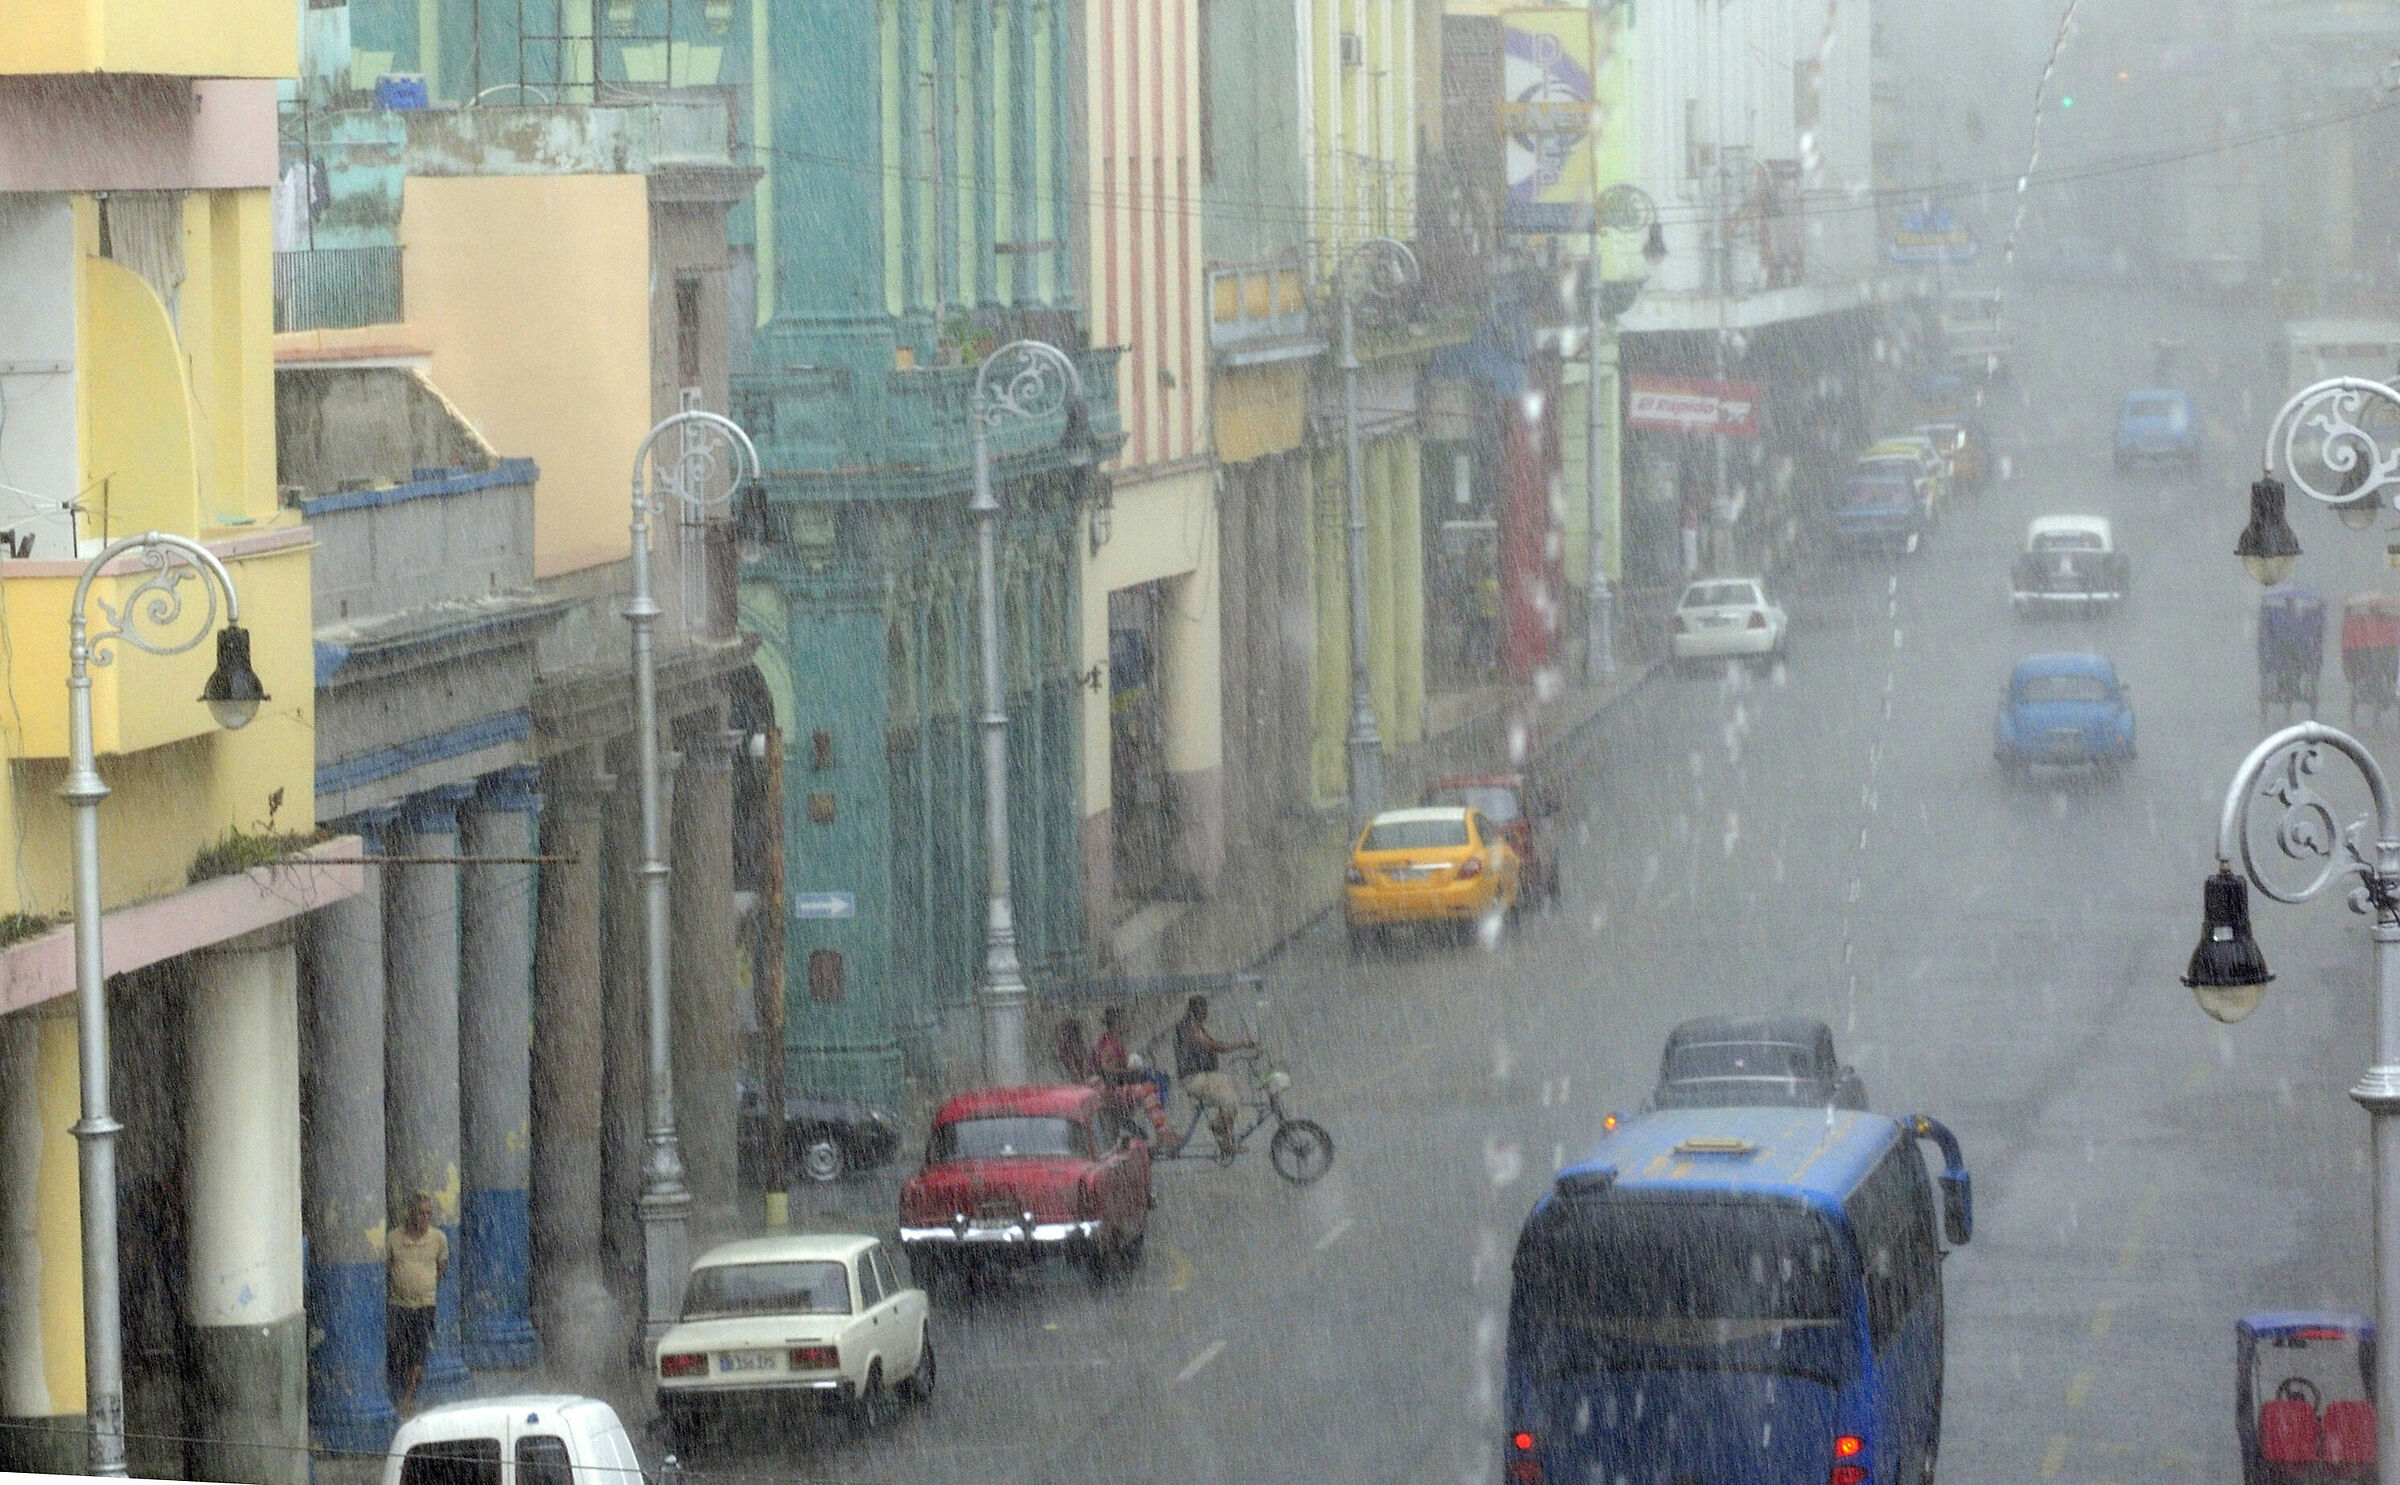 Rainy day in La Habana...